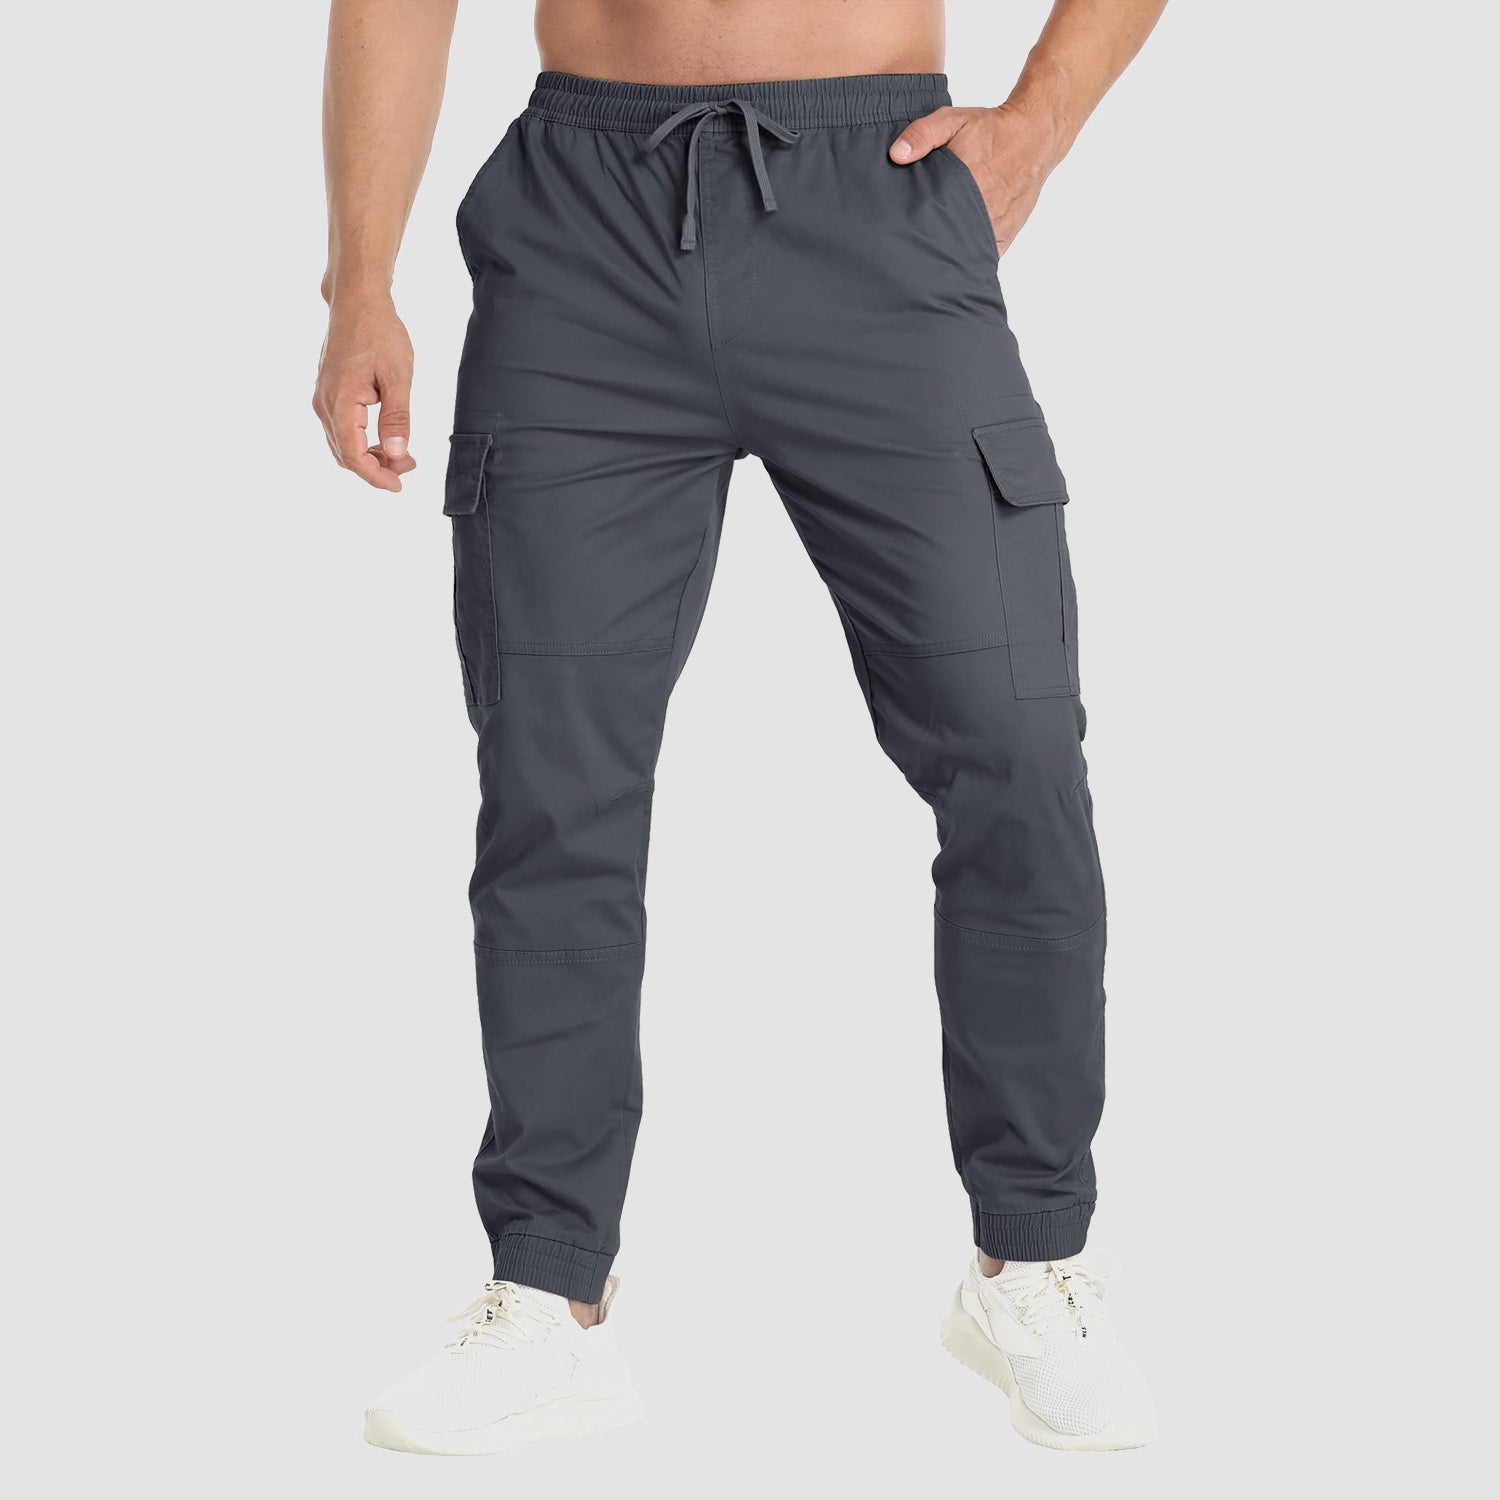 MAGCOMSEN Men's Cargo Pants Elastic Waist Quick Dry Trousers, Black / 40